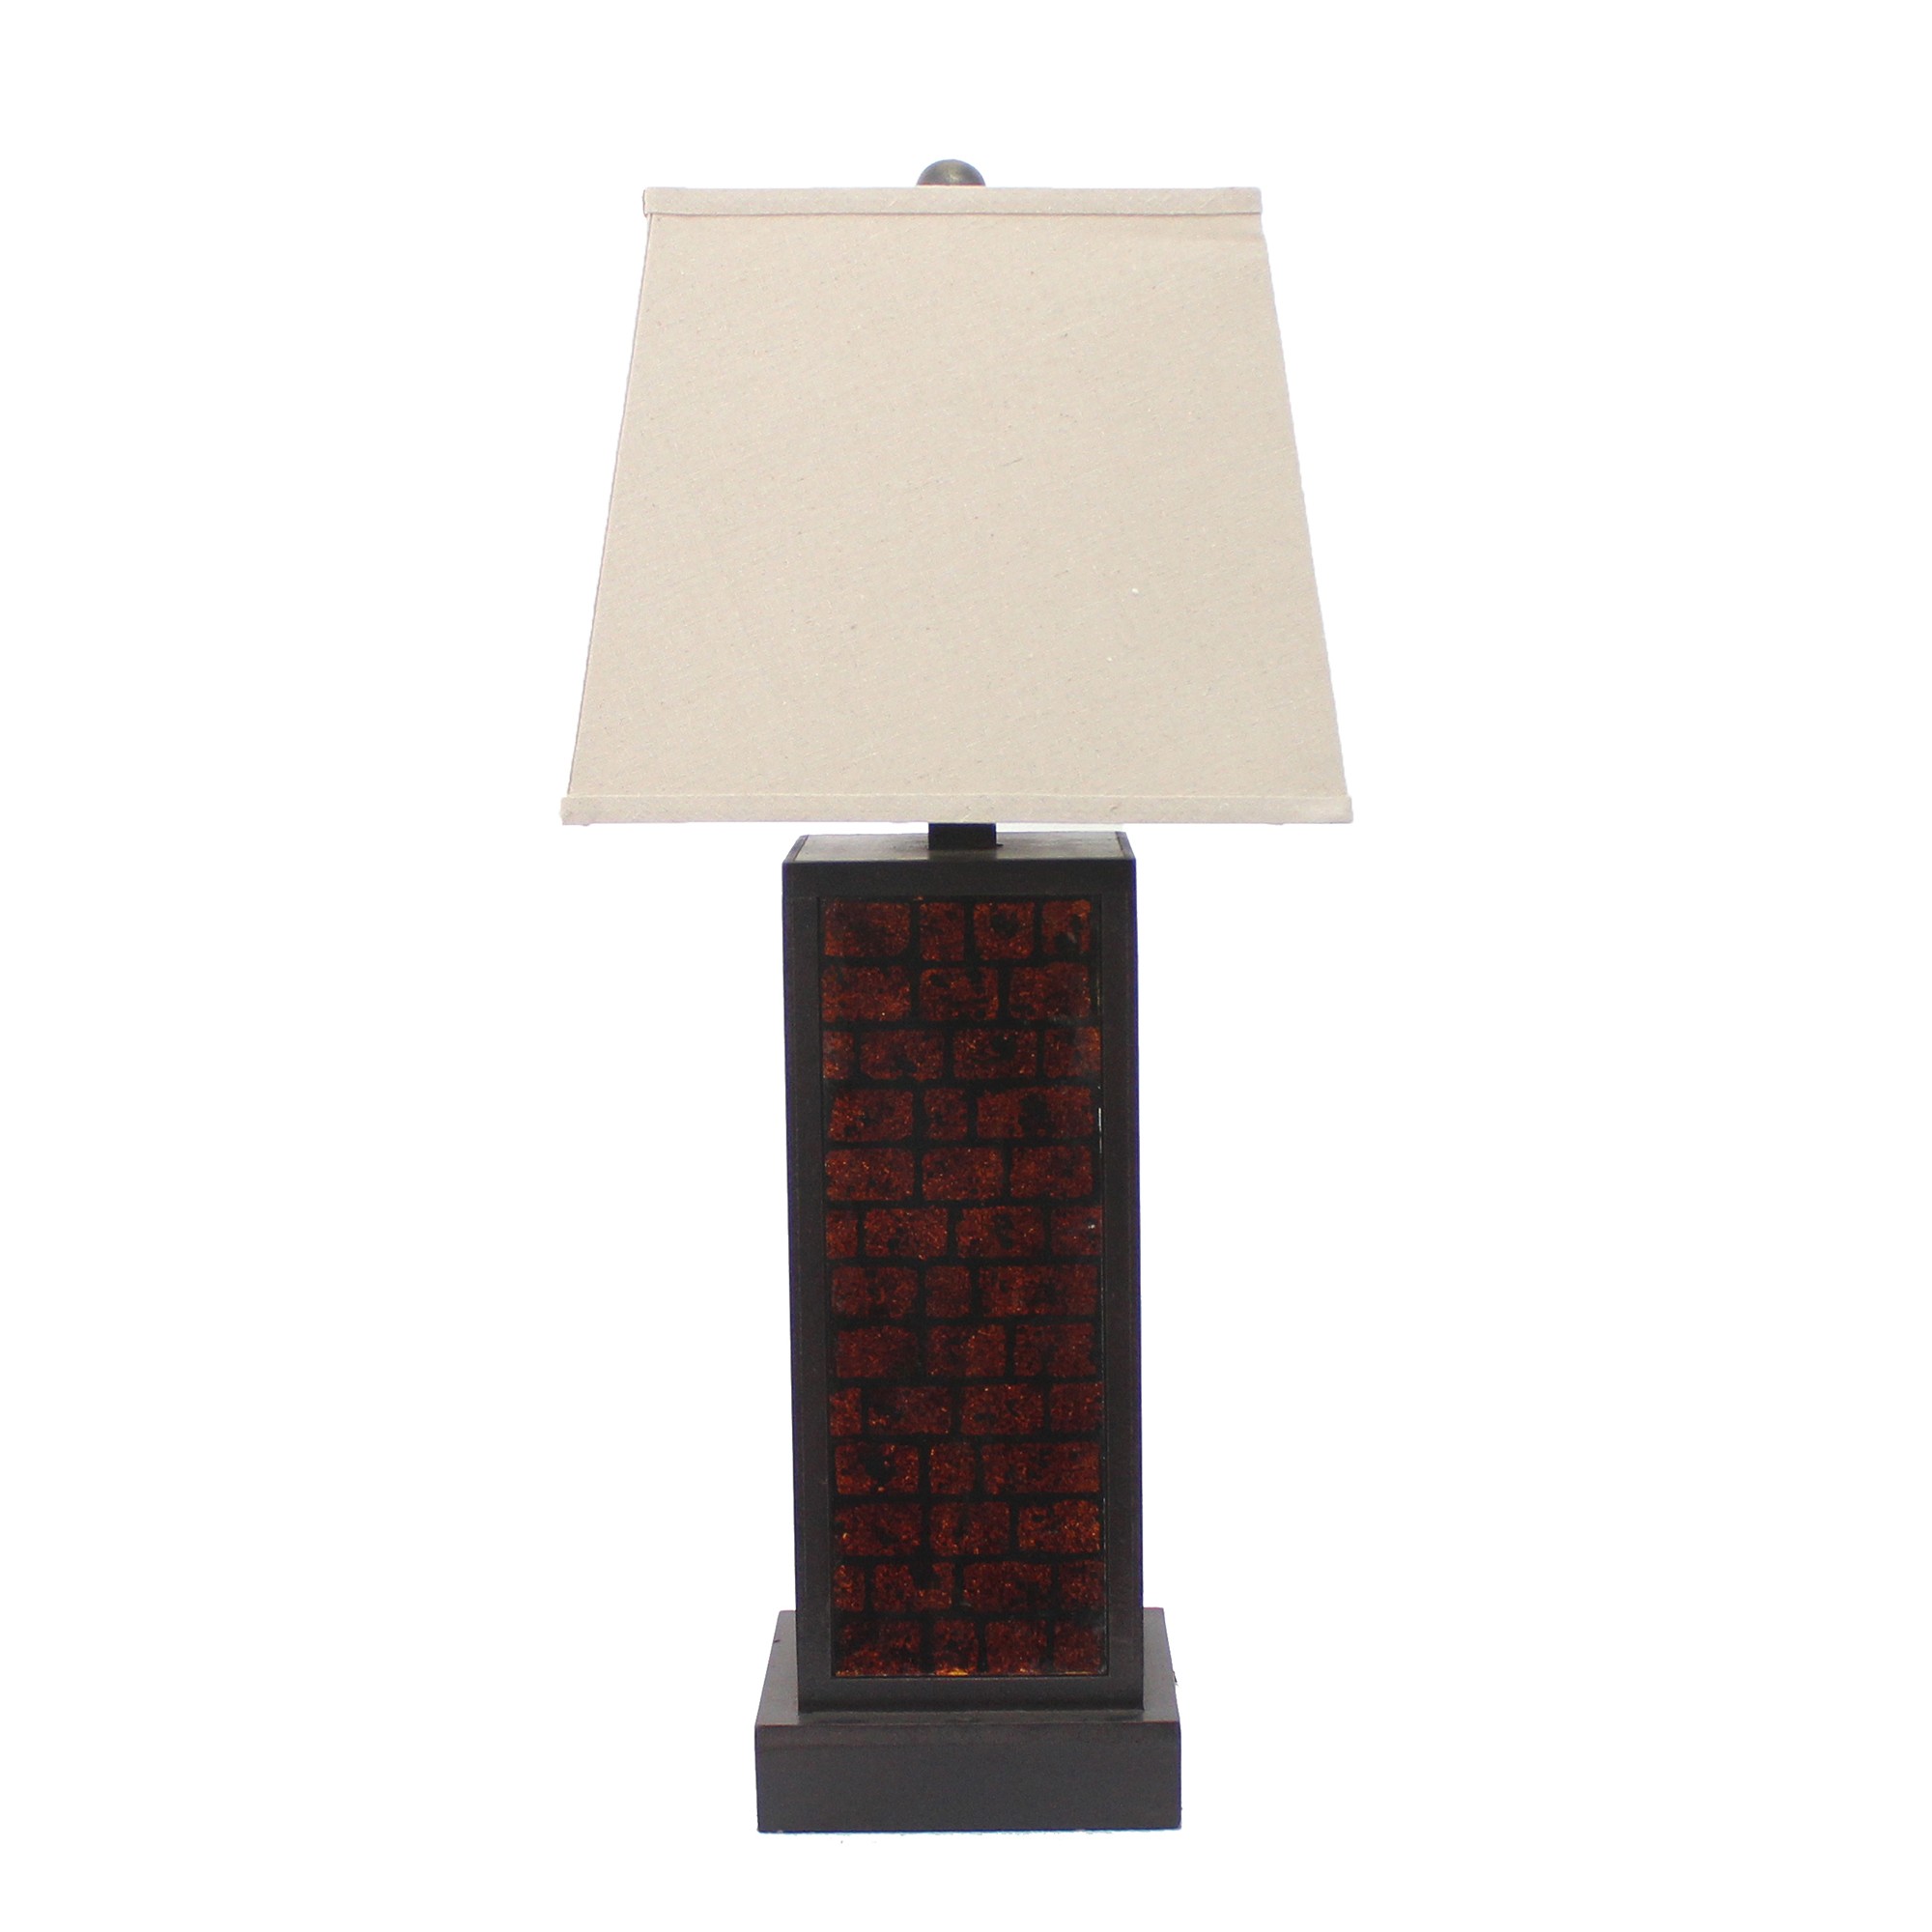 13" x 15" x 30.75" Burgundy, Metal, Brick Pattern - Table Lamp